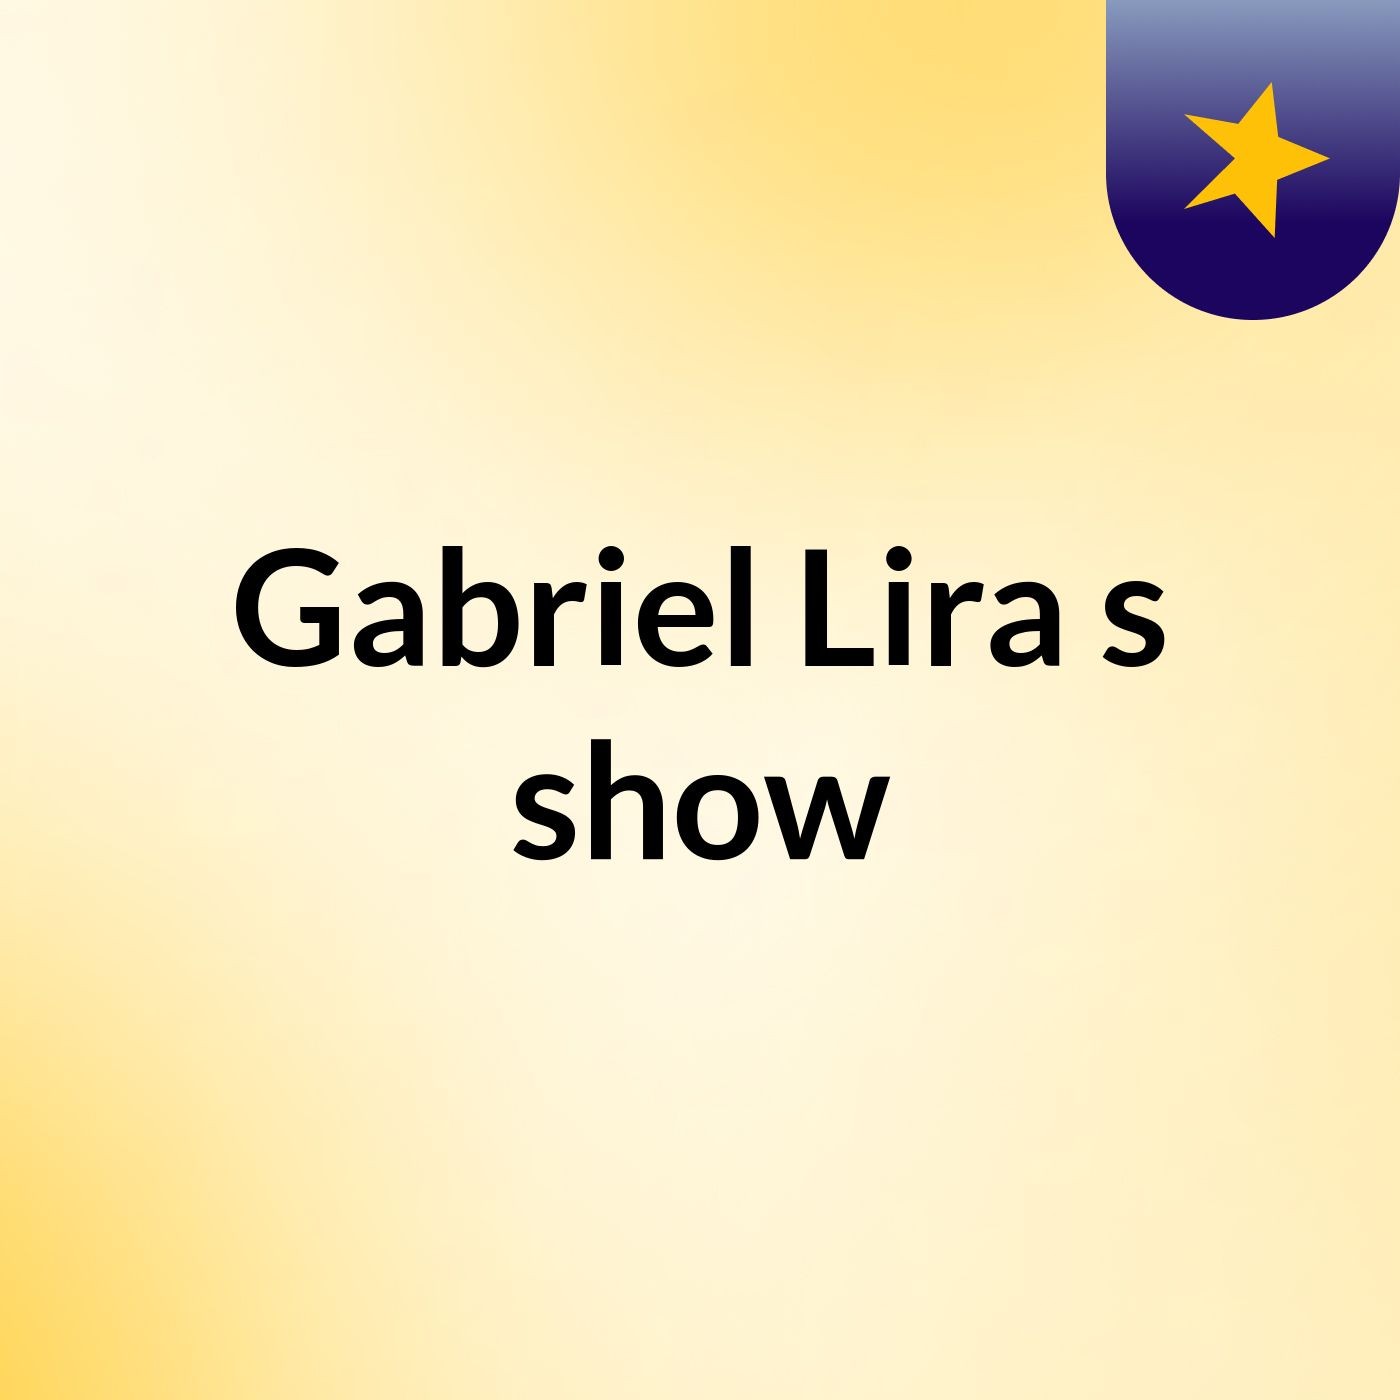 Gabriel Lira's show